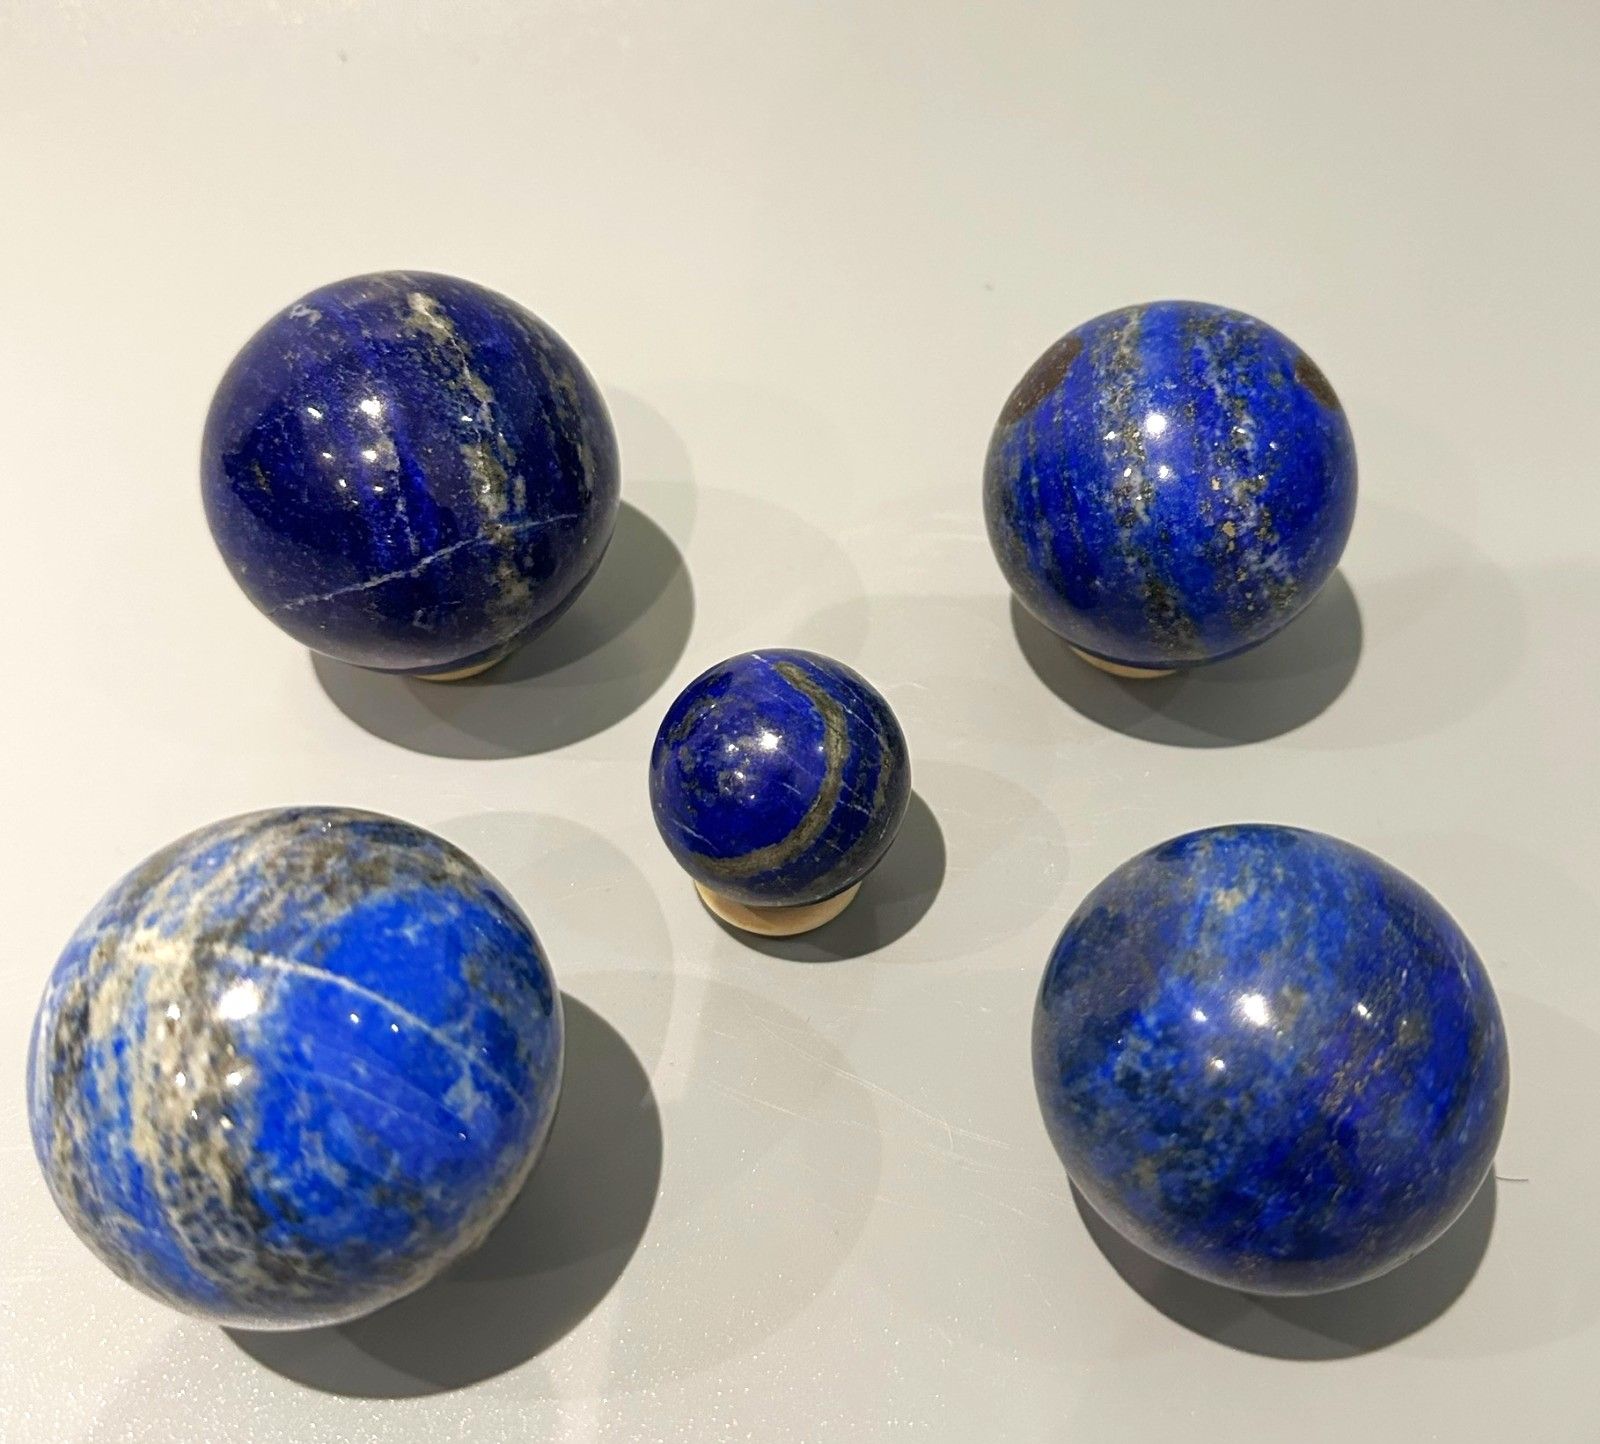 New from Pakistan - Polished Lapis Lazuli Spheres